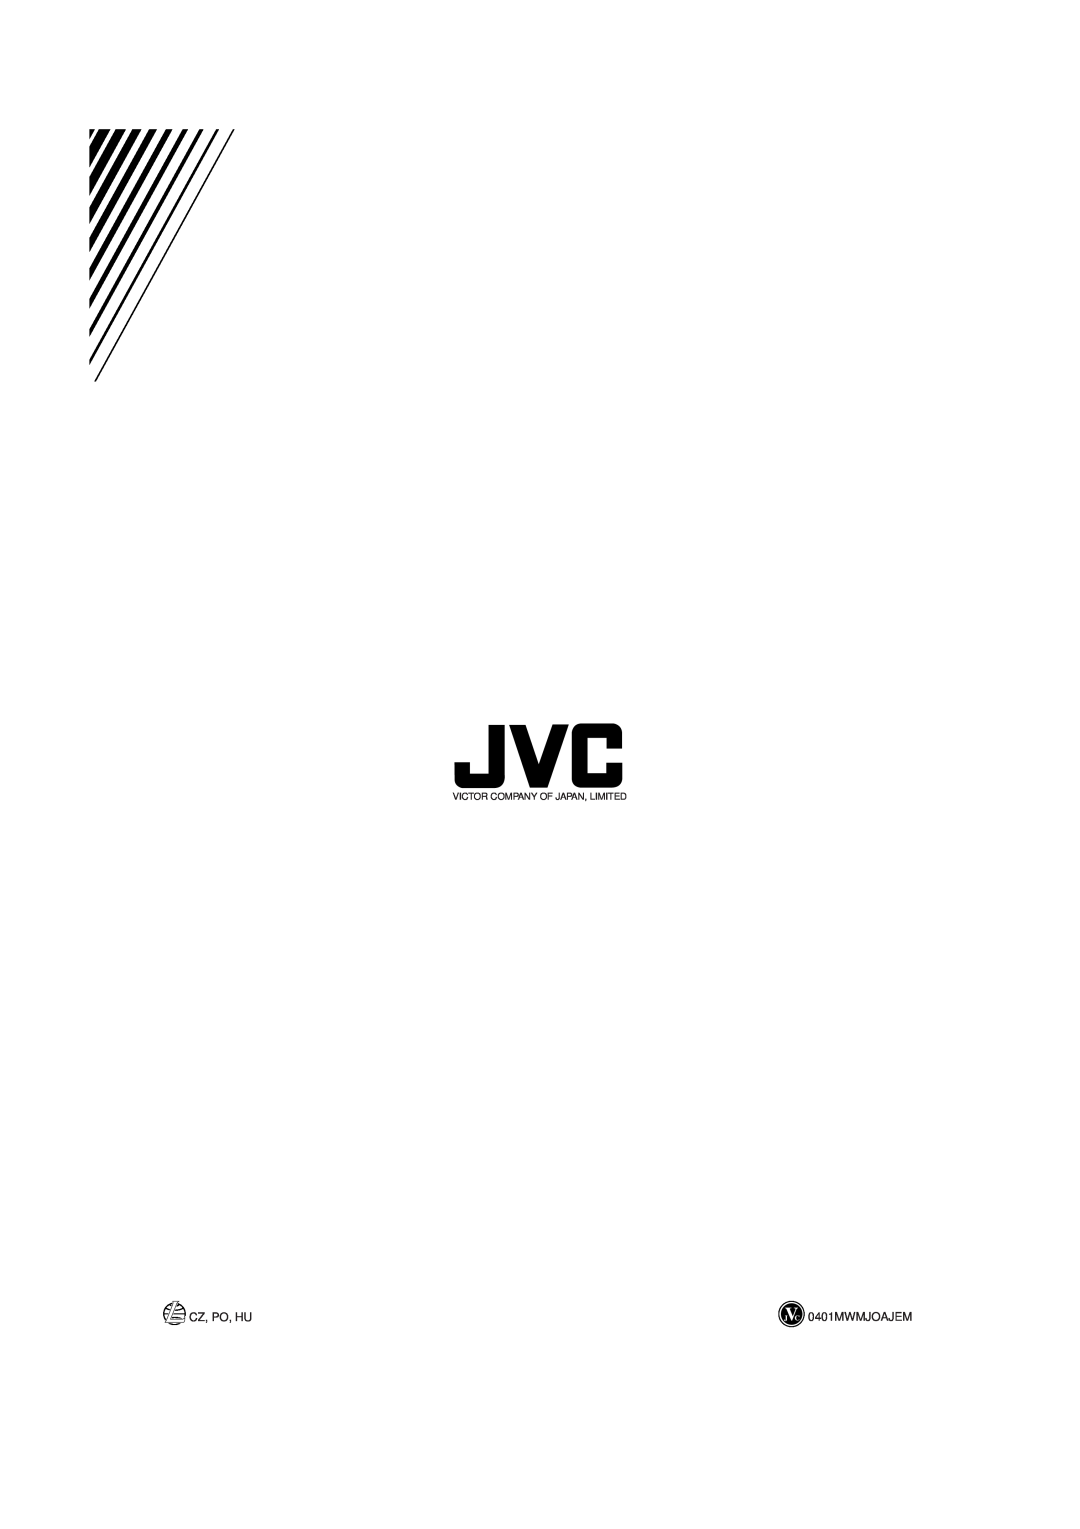 JVC CA-UXP5R, SP-UXP3, UX-P3R, UX-P5R, CA-UXP3R manual Cz, Po, Hu, 0401MWMJOAJEM, Victor Company Of Japan, Limited 